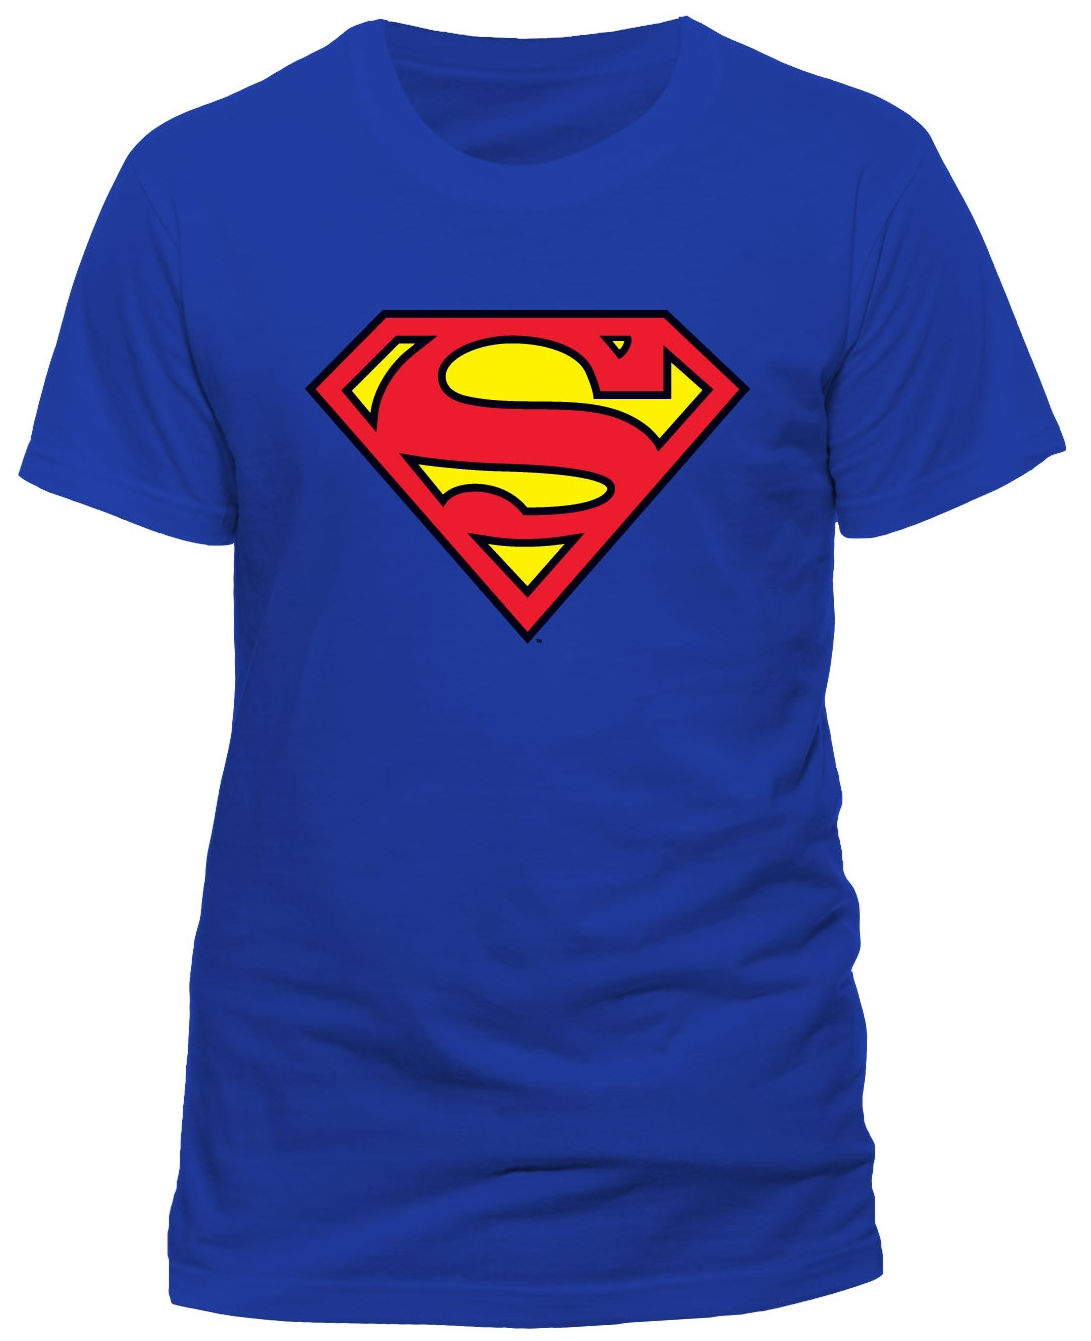 Superman Logo Blue T-Shirt - OFFICIAL | eBay | T-Shirts